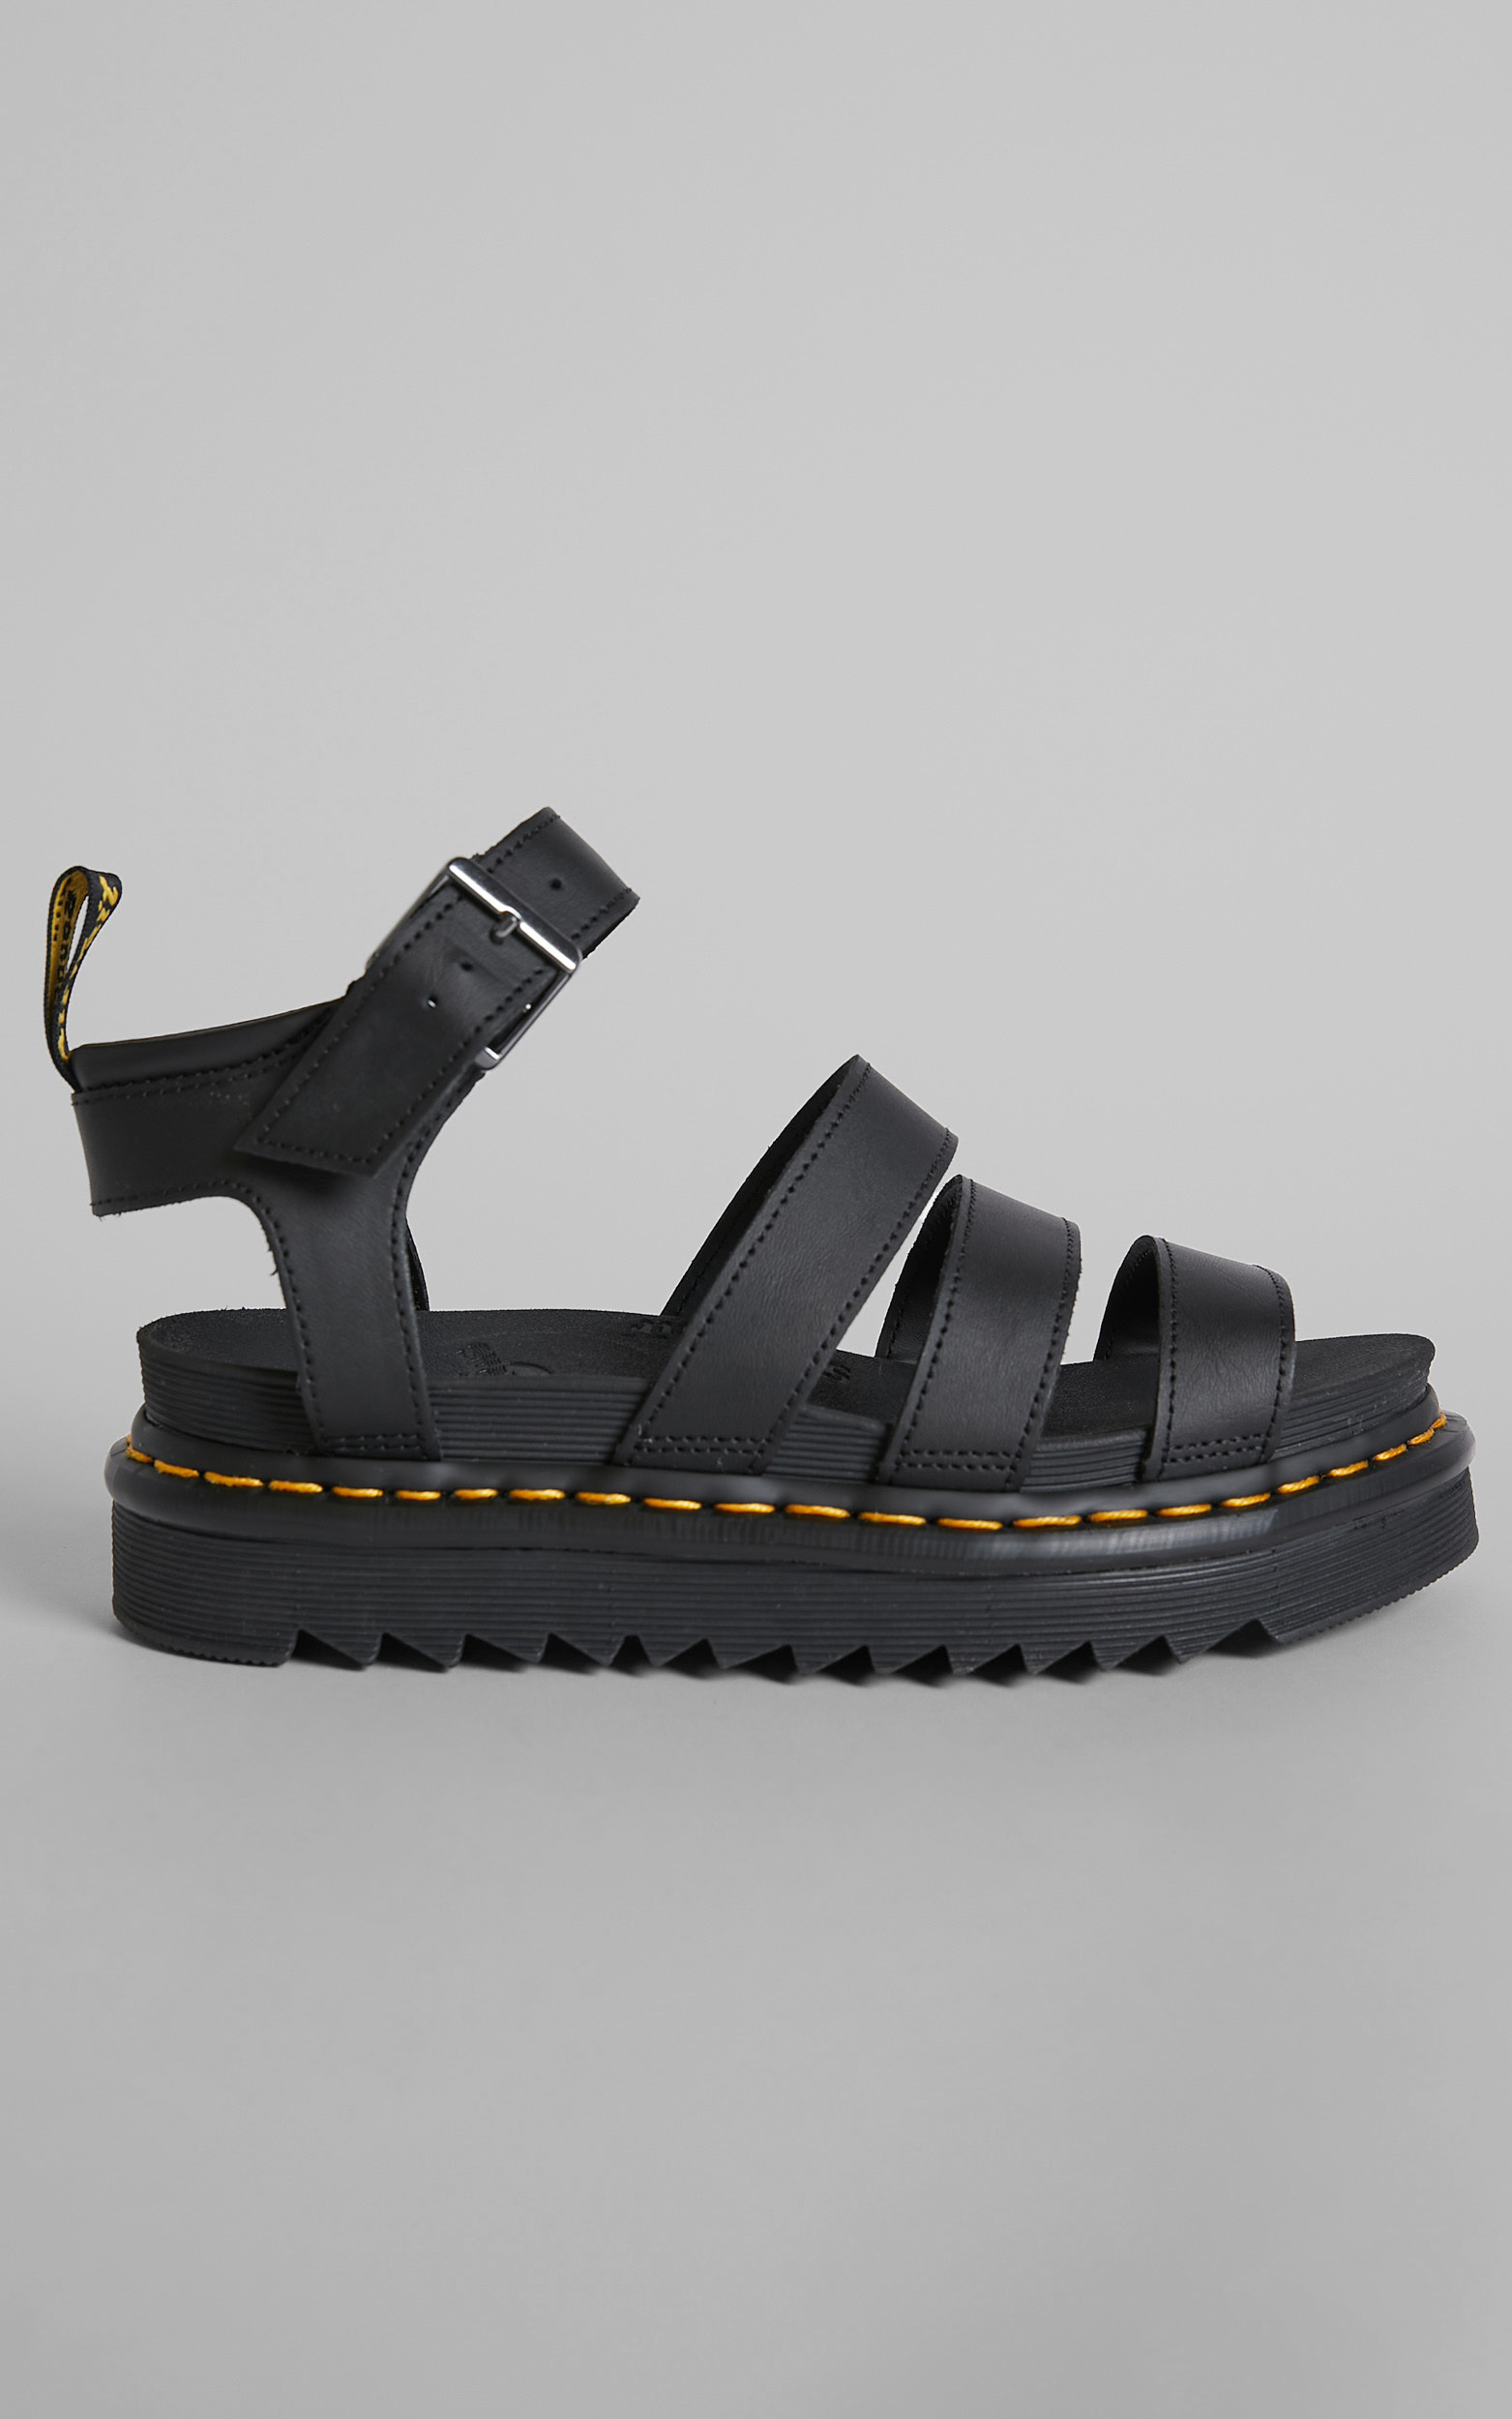 Dr. Martens - Blaire Hydro Sandals in Black - 06, BLK1, hi-res image number null